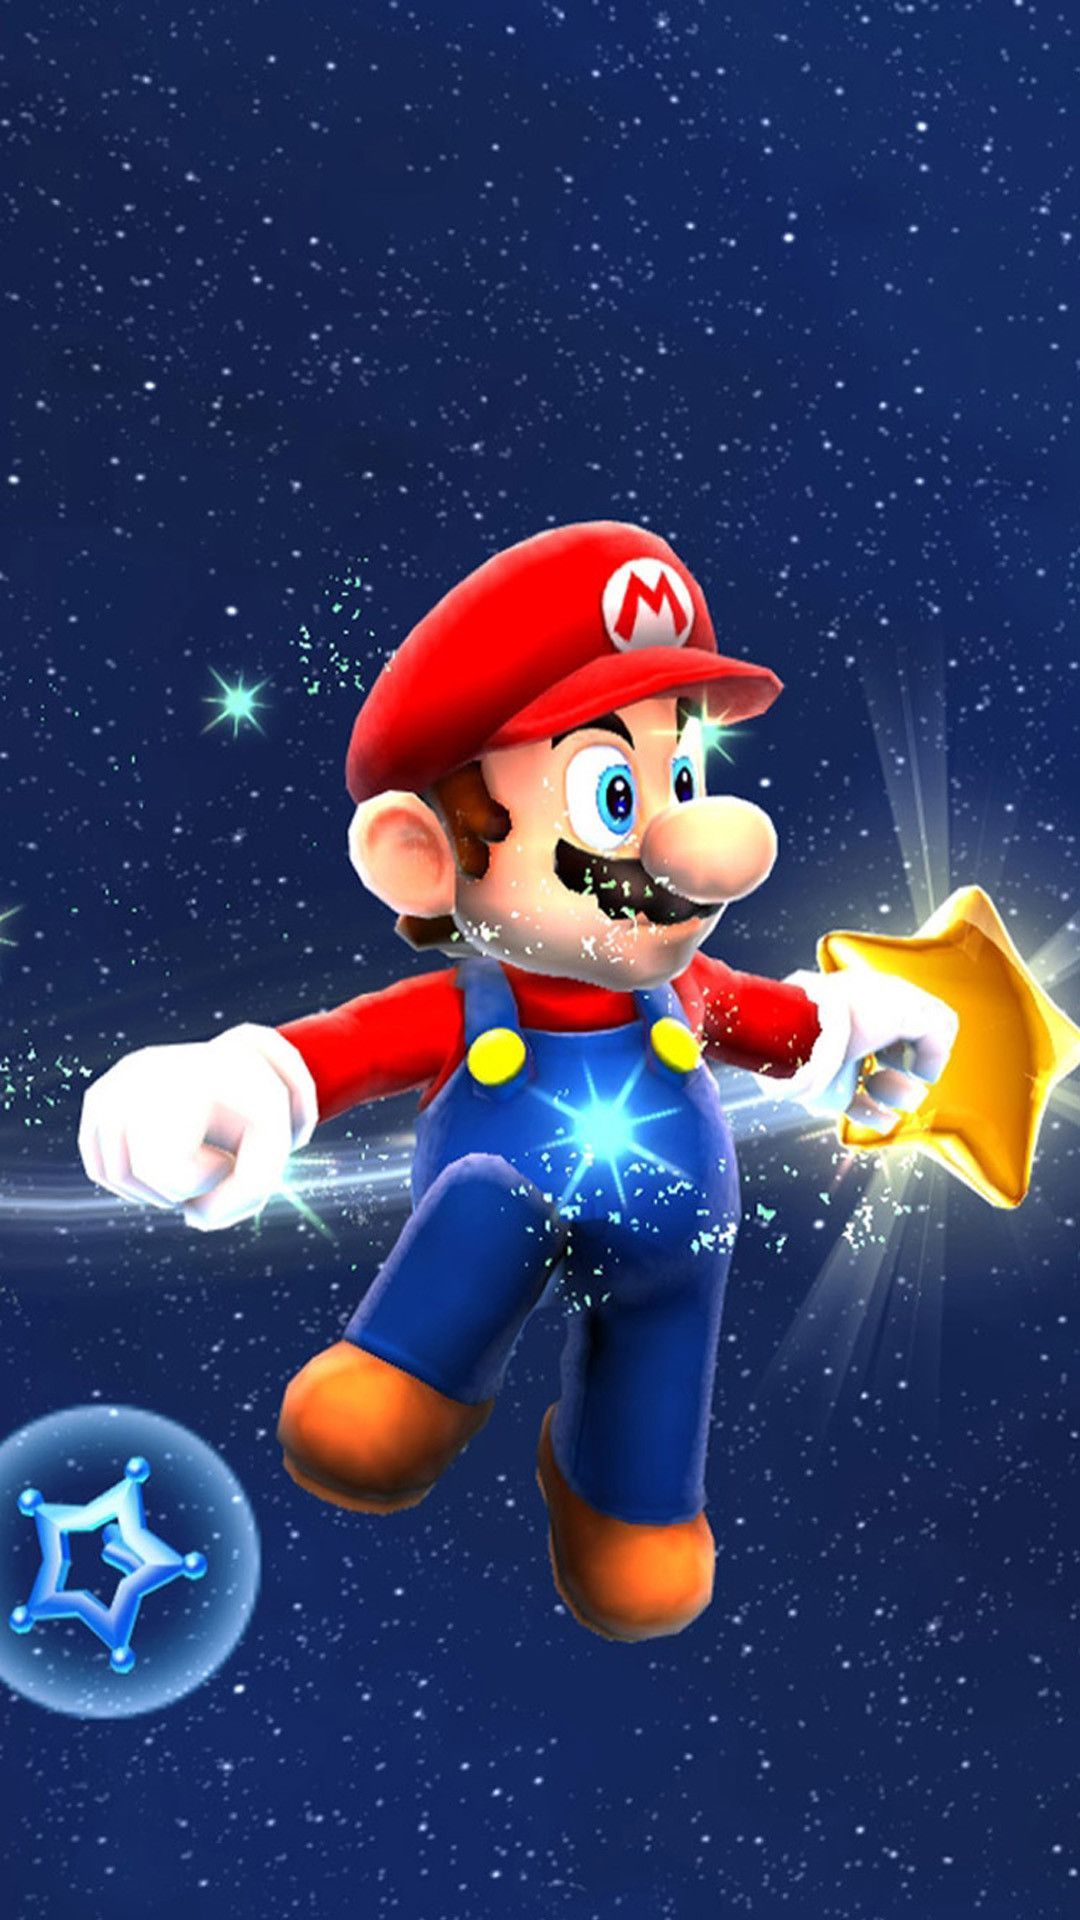 Bit Mario Background Image. Super mario art, Super mario, Super mario galaxy